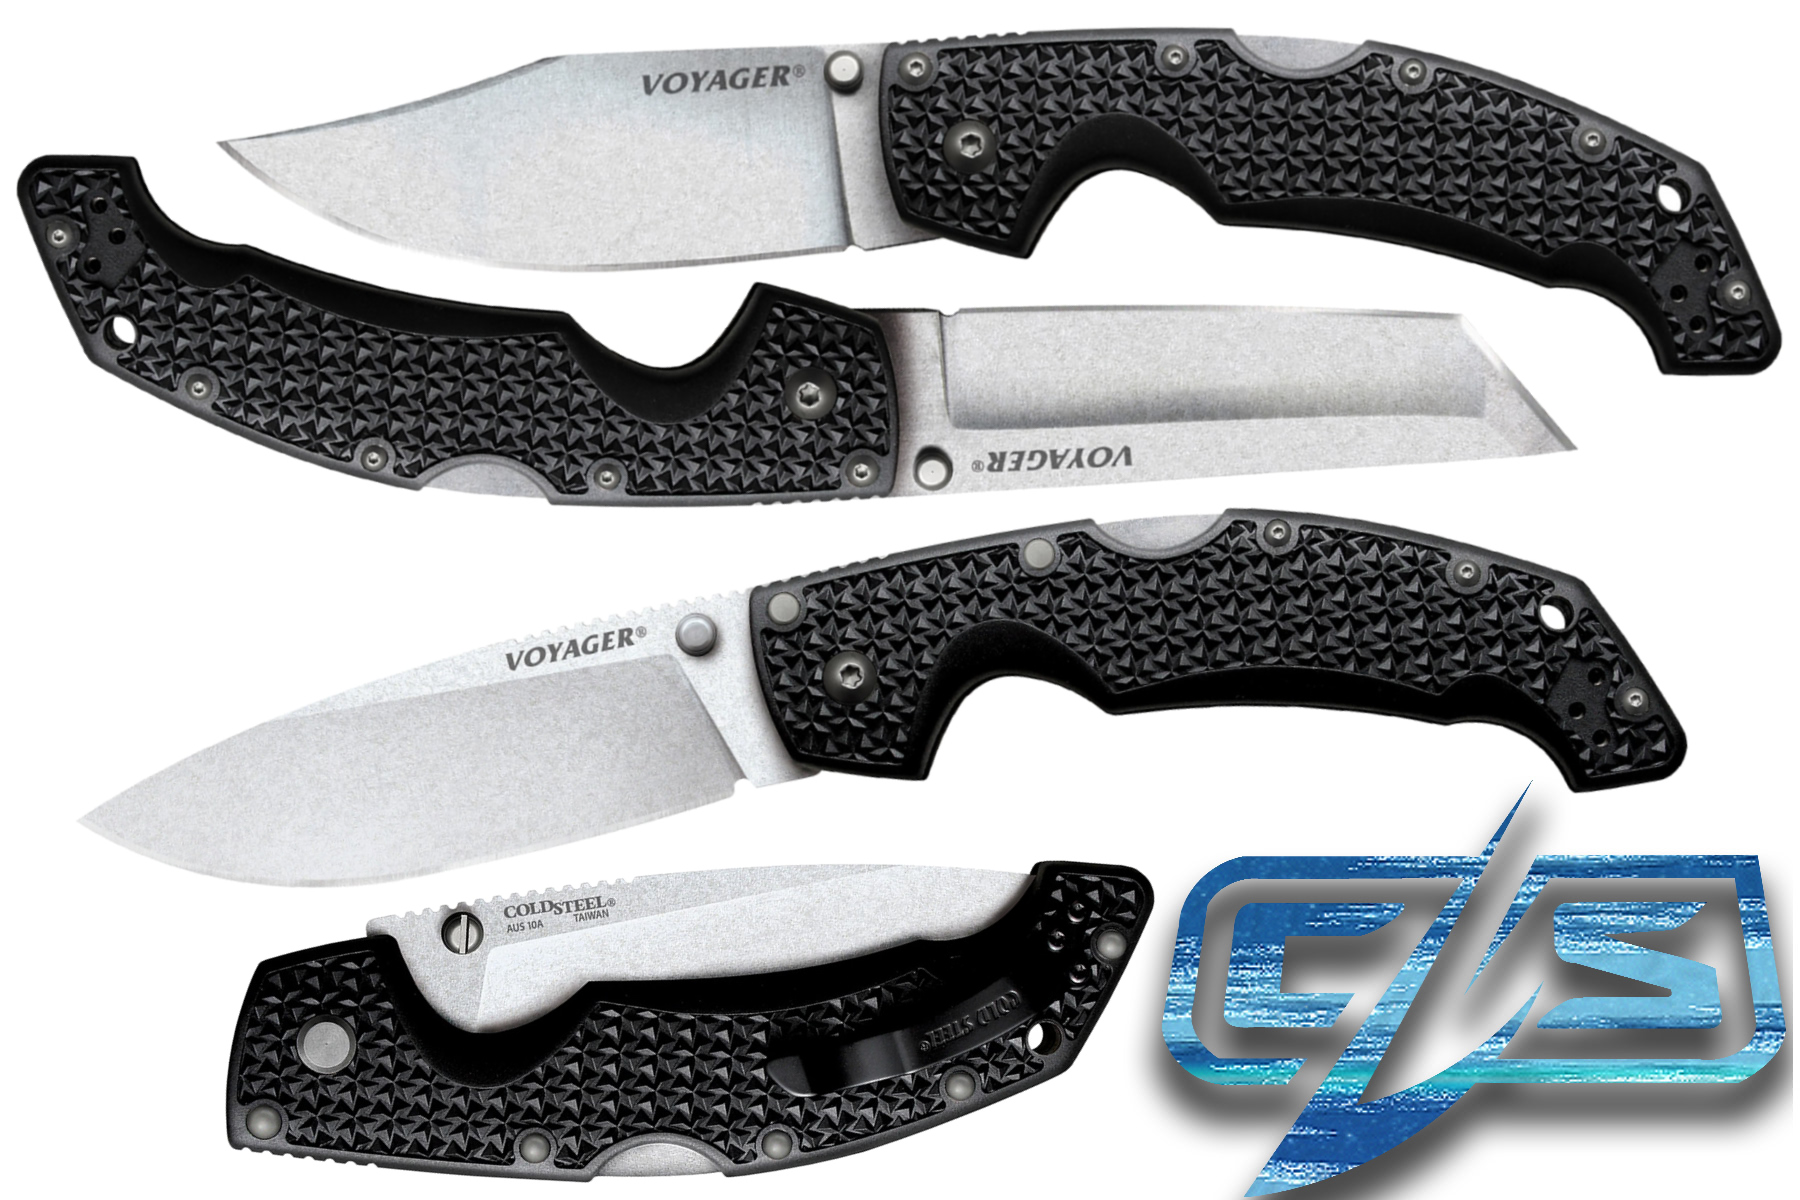 Складные ножи Cold Steel Voyager Large, 4-х дюймовый клинок (100-102 мм) 29AC — Clip Point, 29AT — Tanto,  29AB — Drop Point